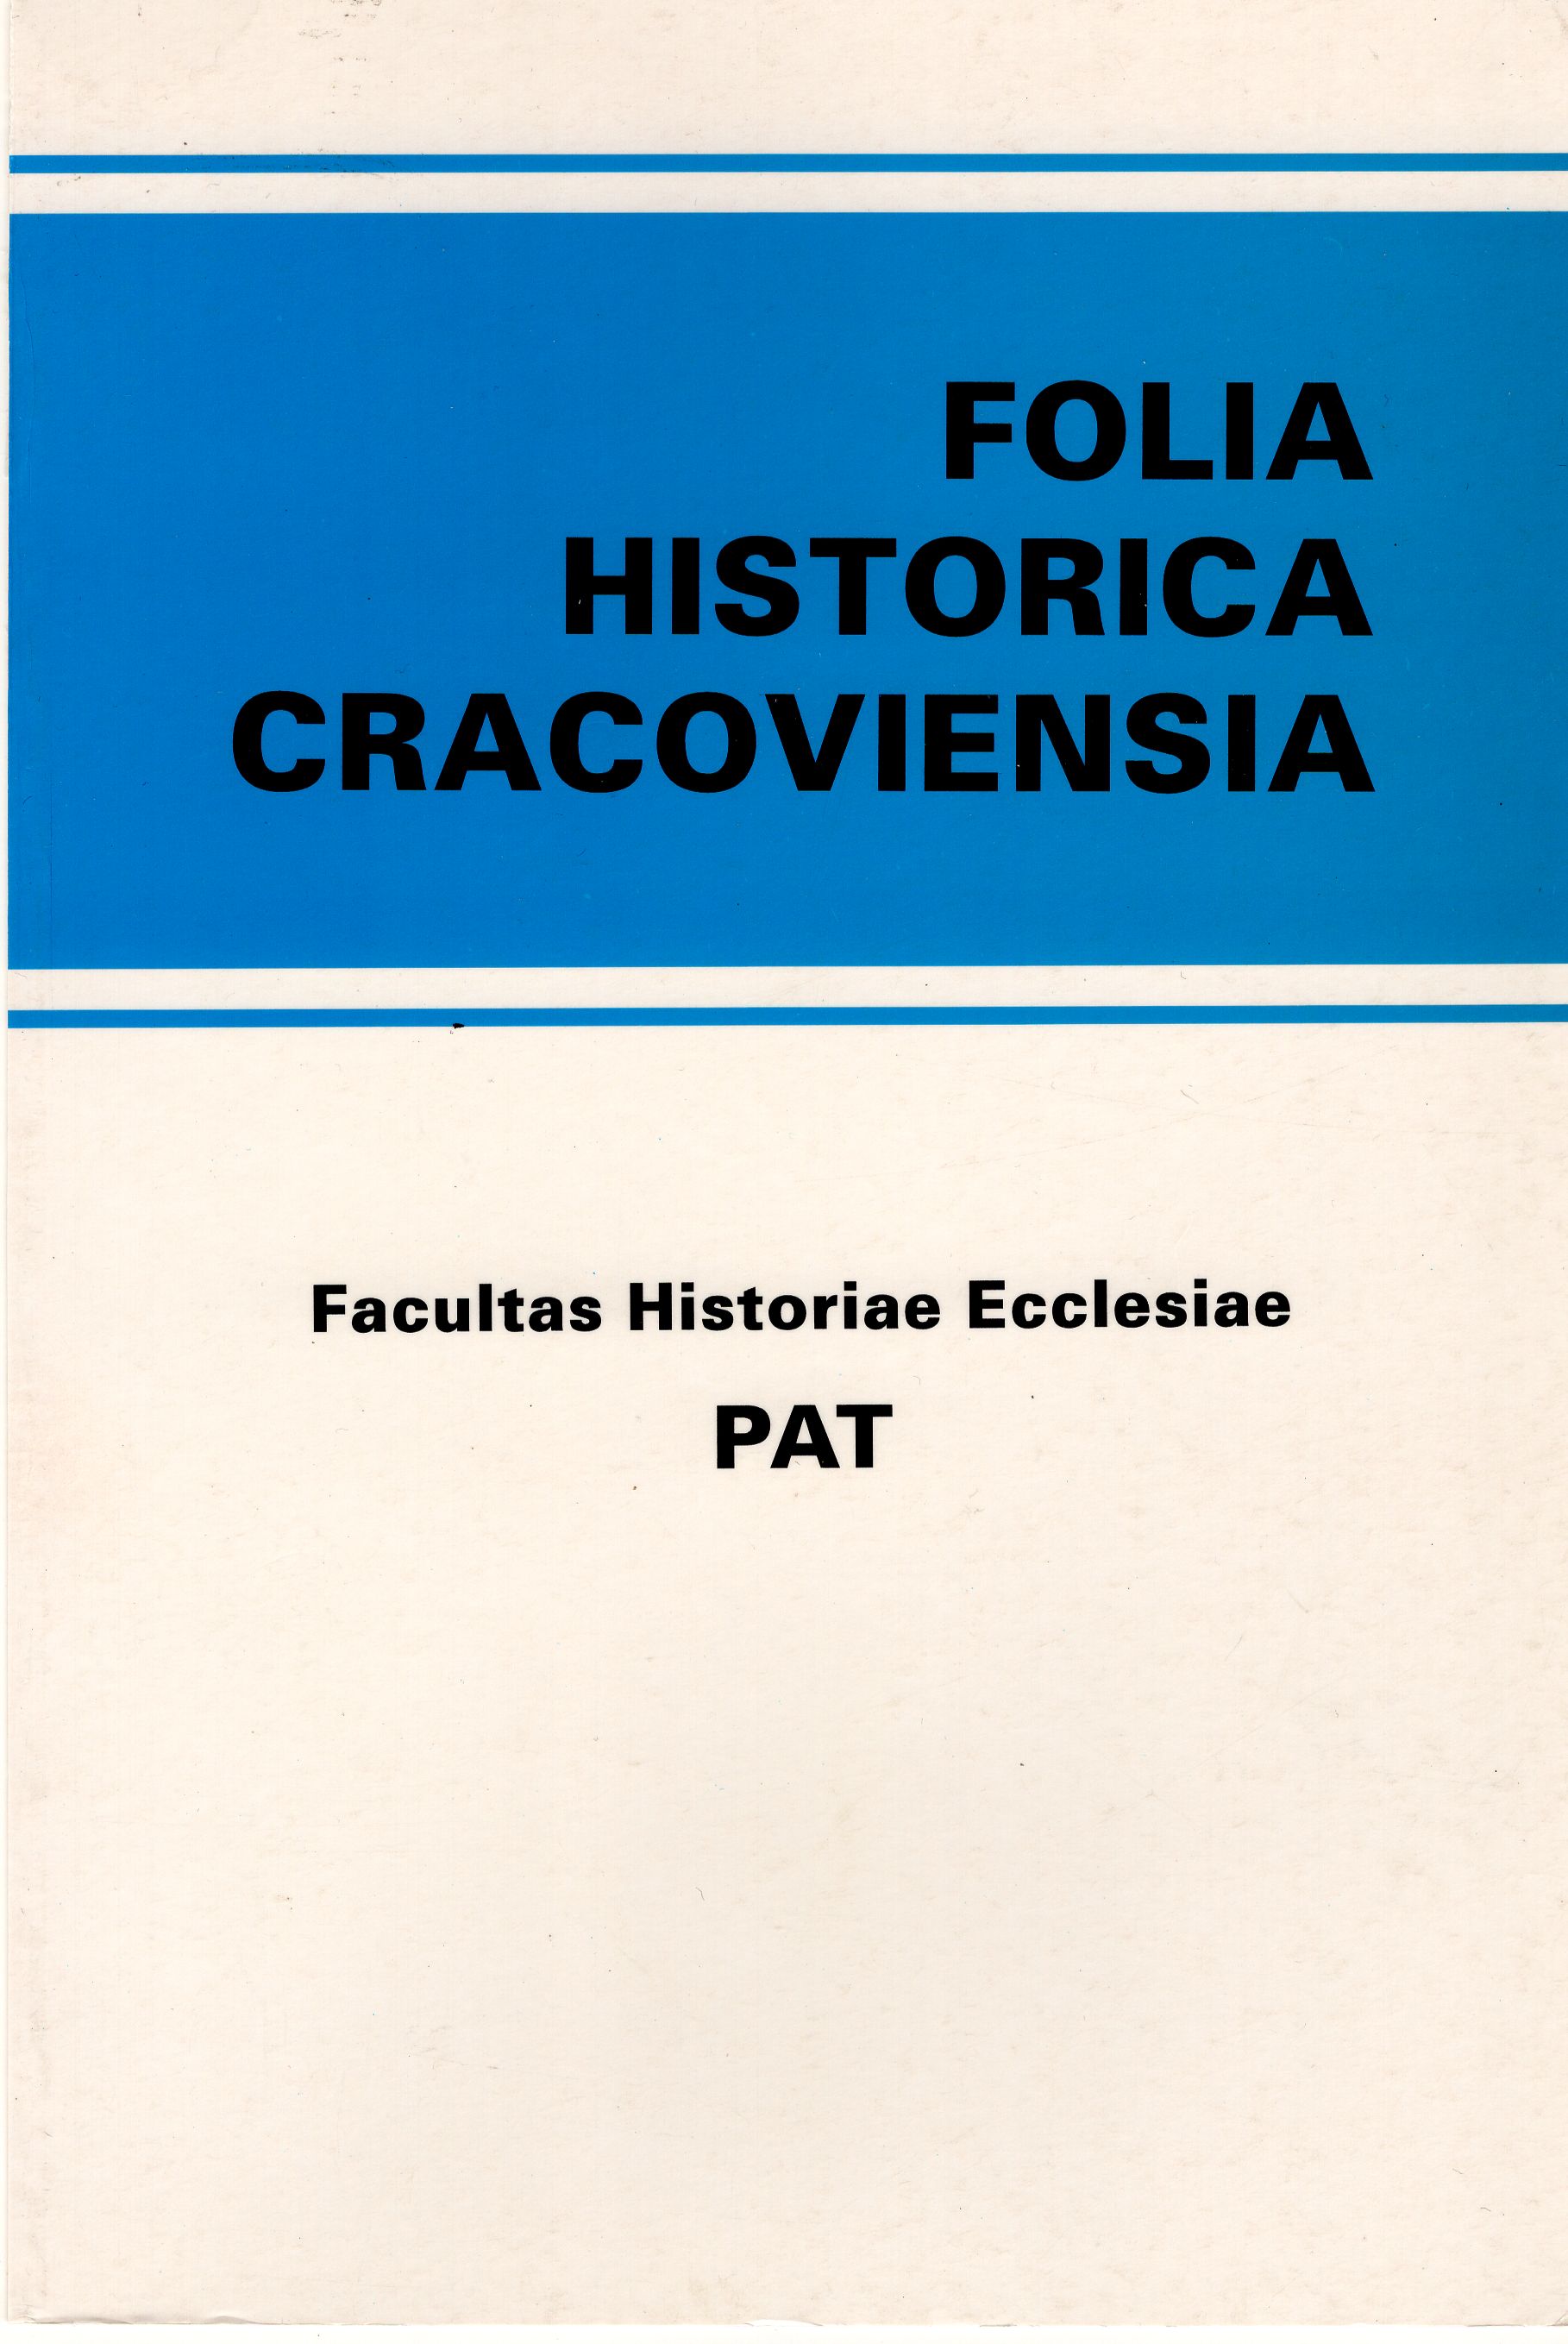 Opuscula et miscelánea. A bibliography of publications by prof. dr hab. Jan Sławomir Samek Cover Image